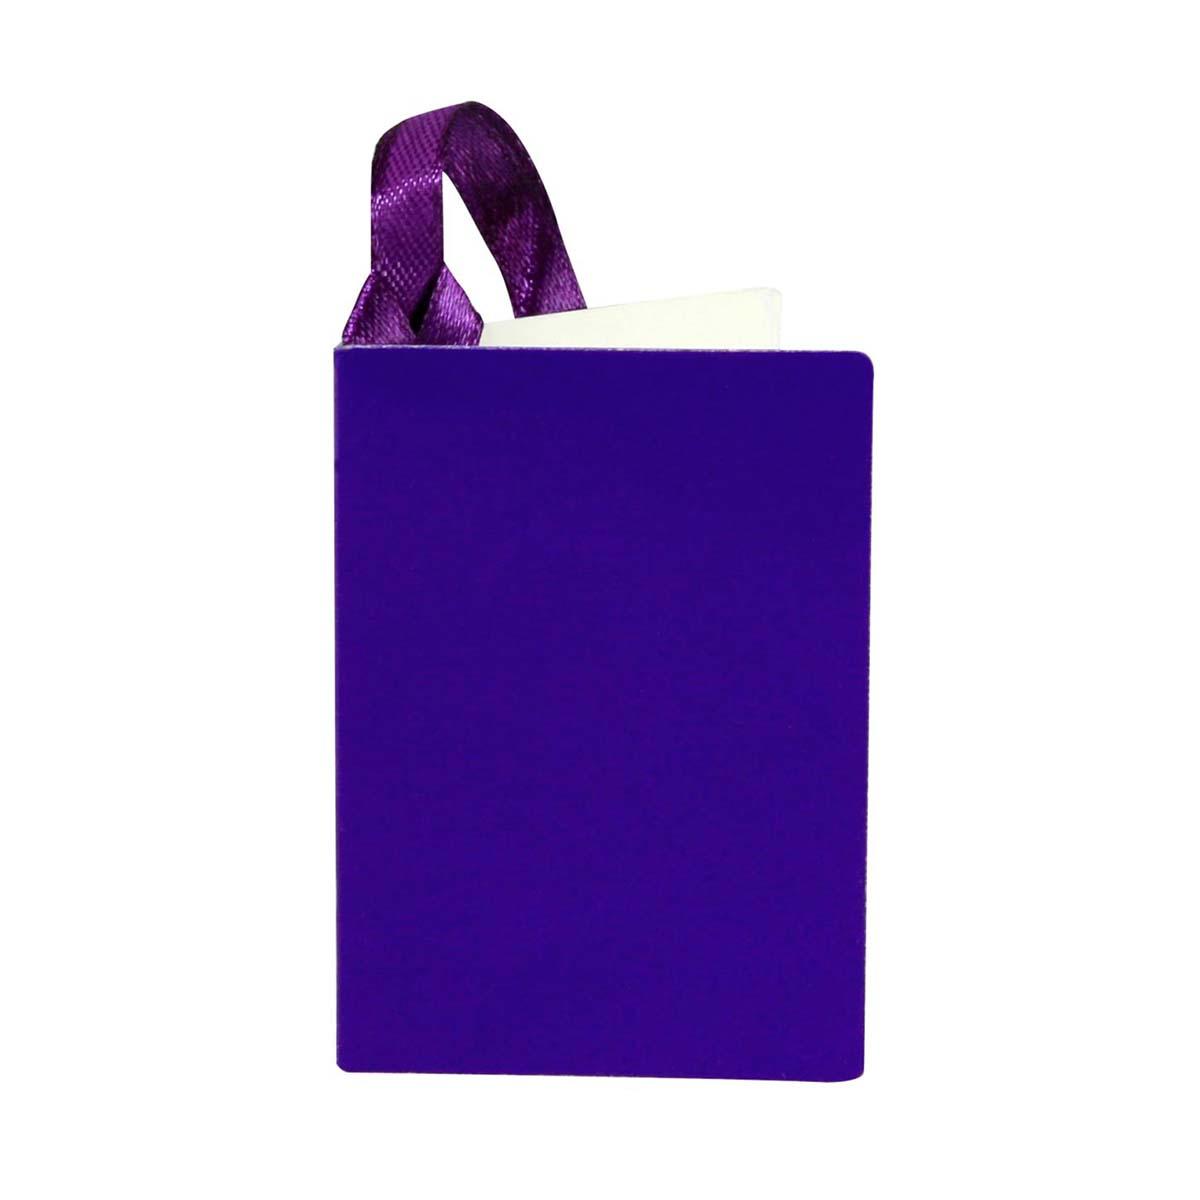 Single Purple Gift Tag Displayed In Full